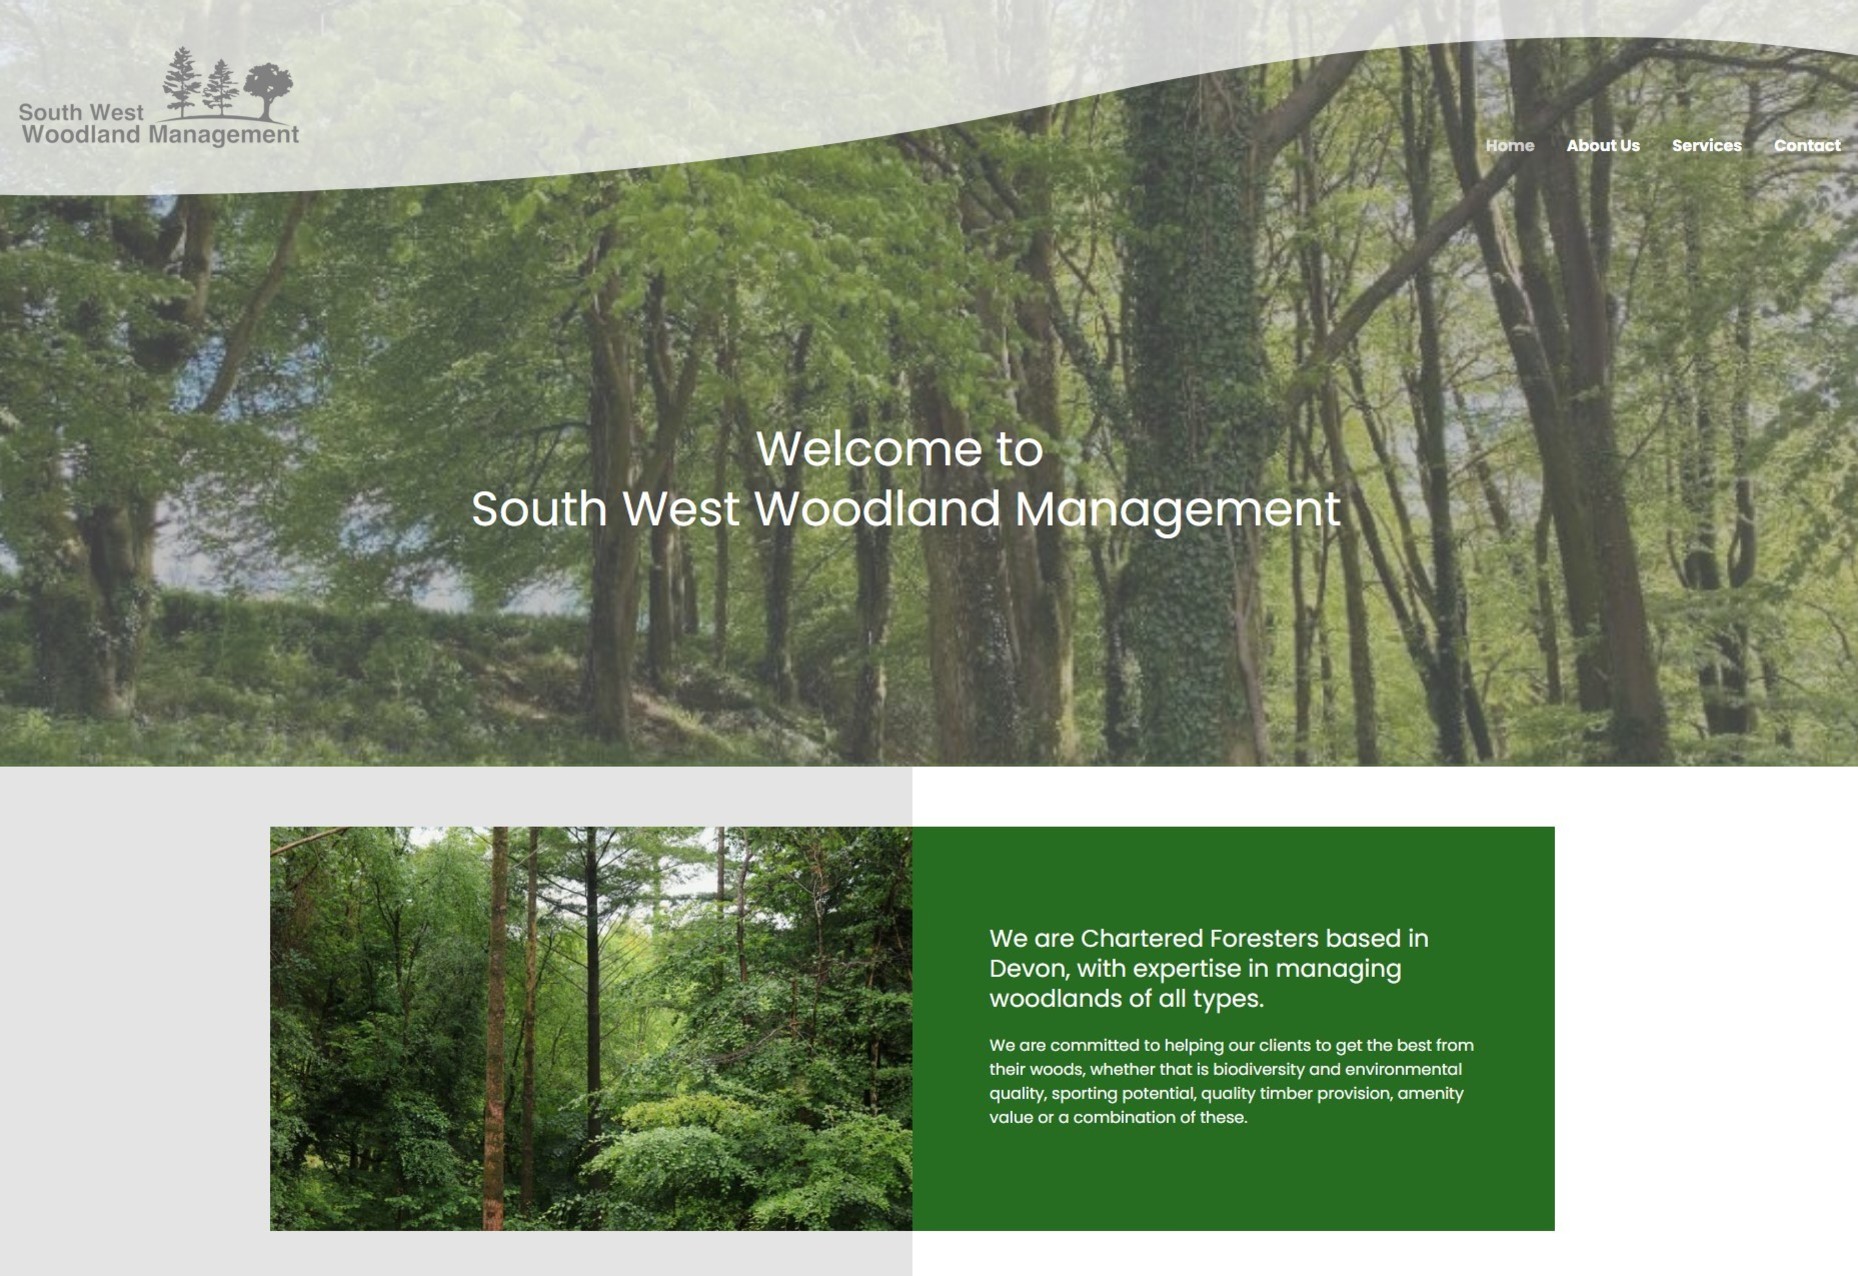 A responsive web design for a woodland management company shown on desktop.